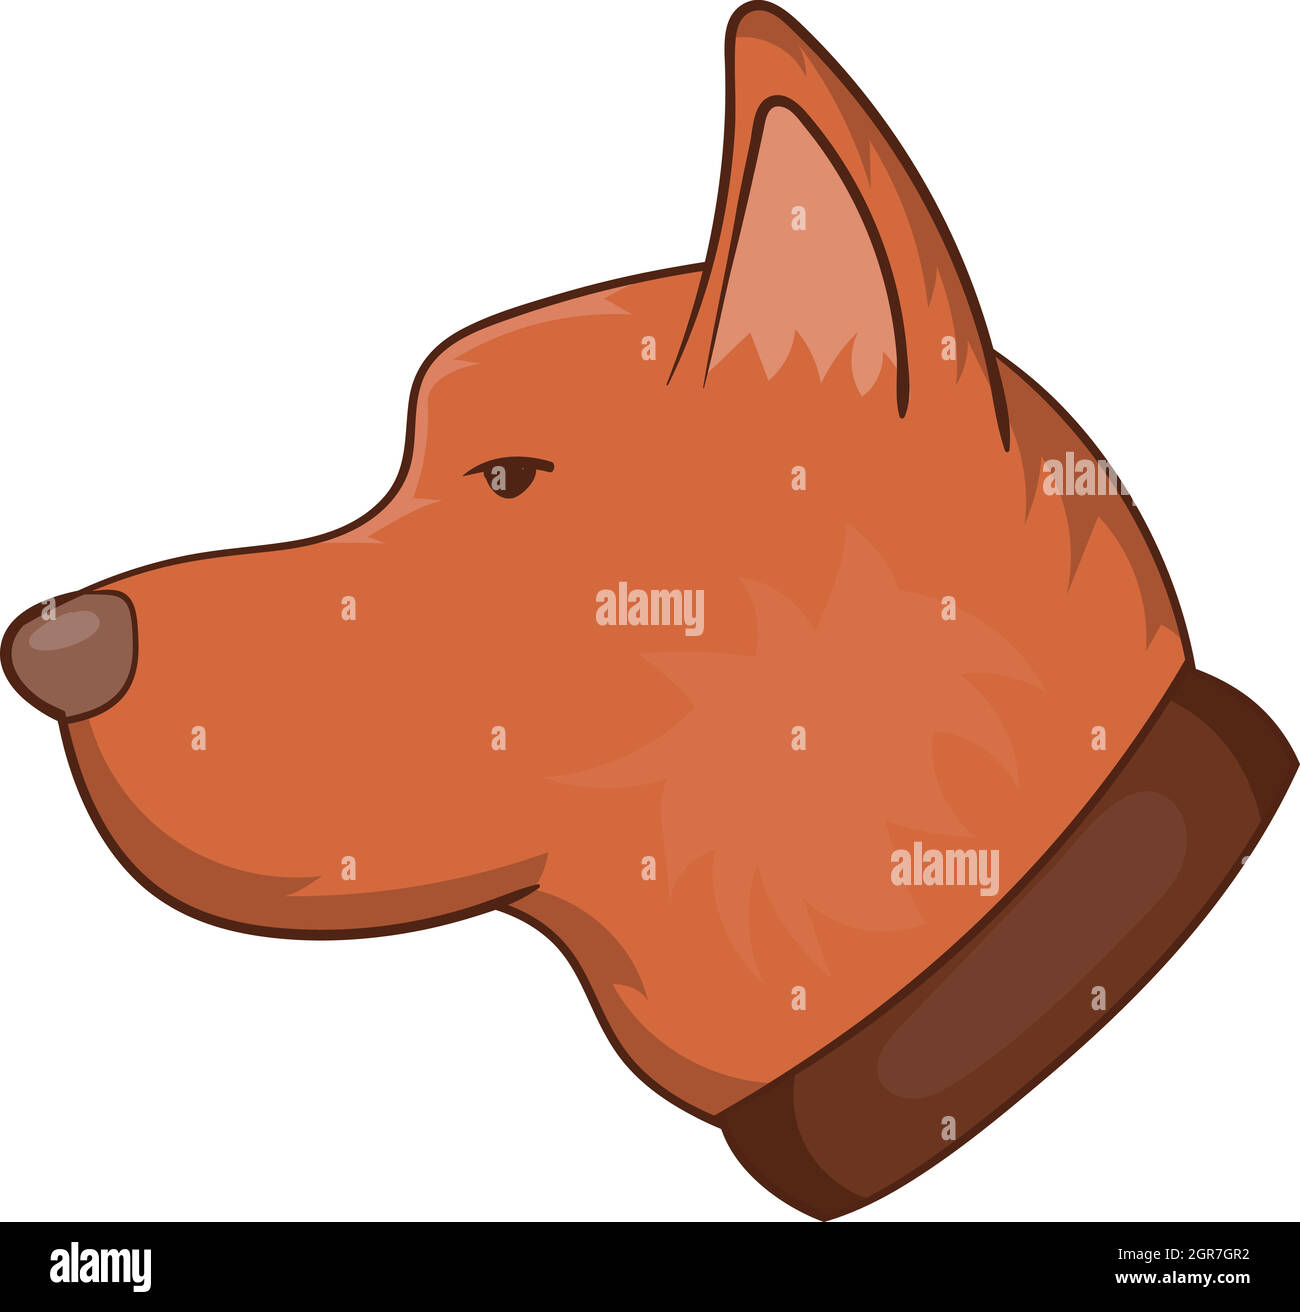 Head of dog icon, cartoon style Stock Vector